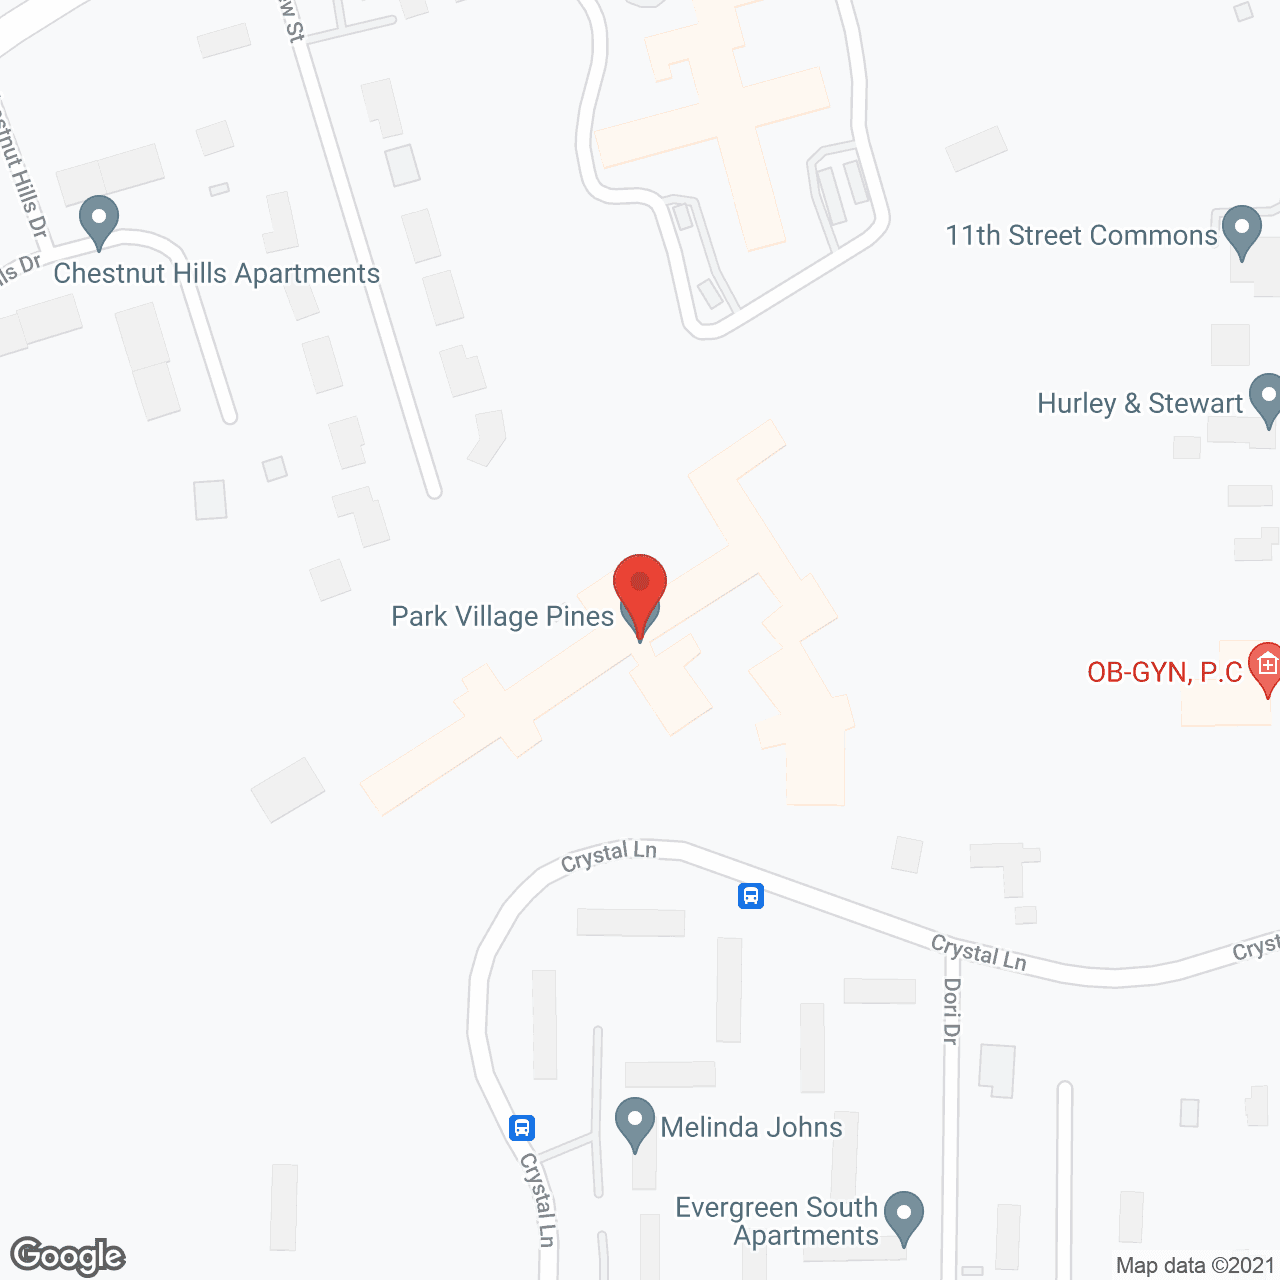 Park Village Pines in google map